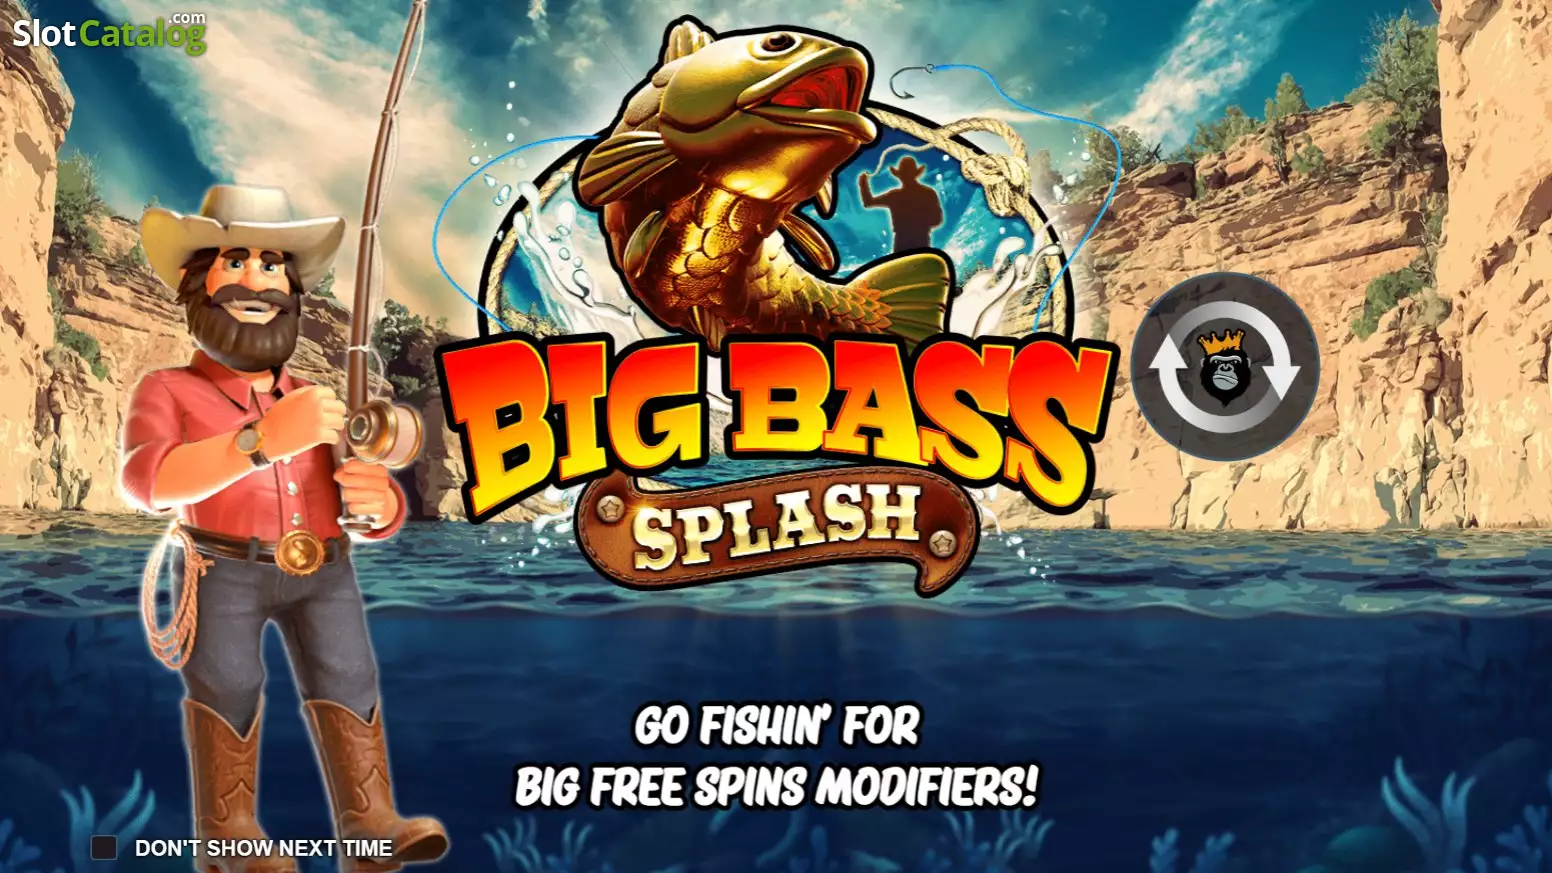 Large Bass Splash Slot Comment Reel inside Prize-Winning Fish